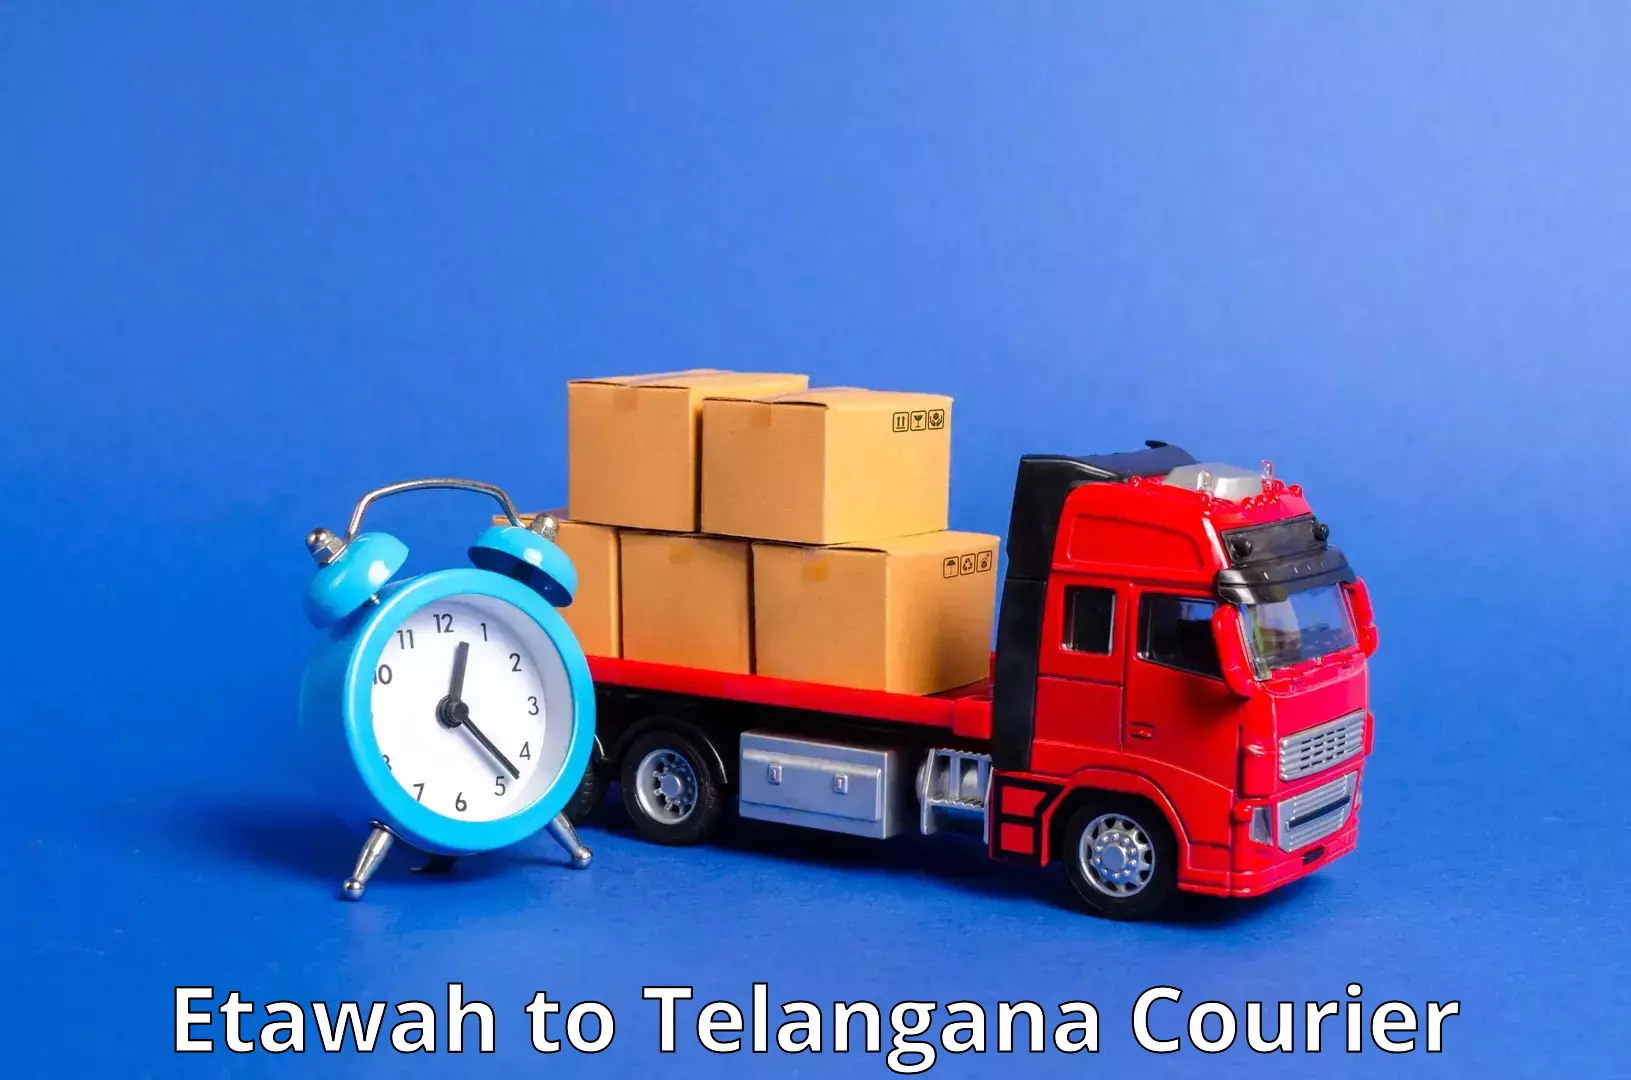 Global courier networks Etawah to Telangana